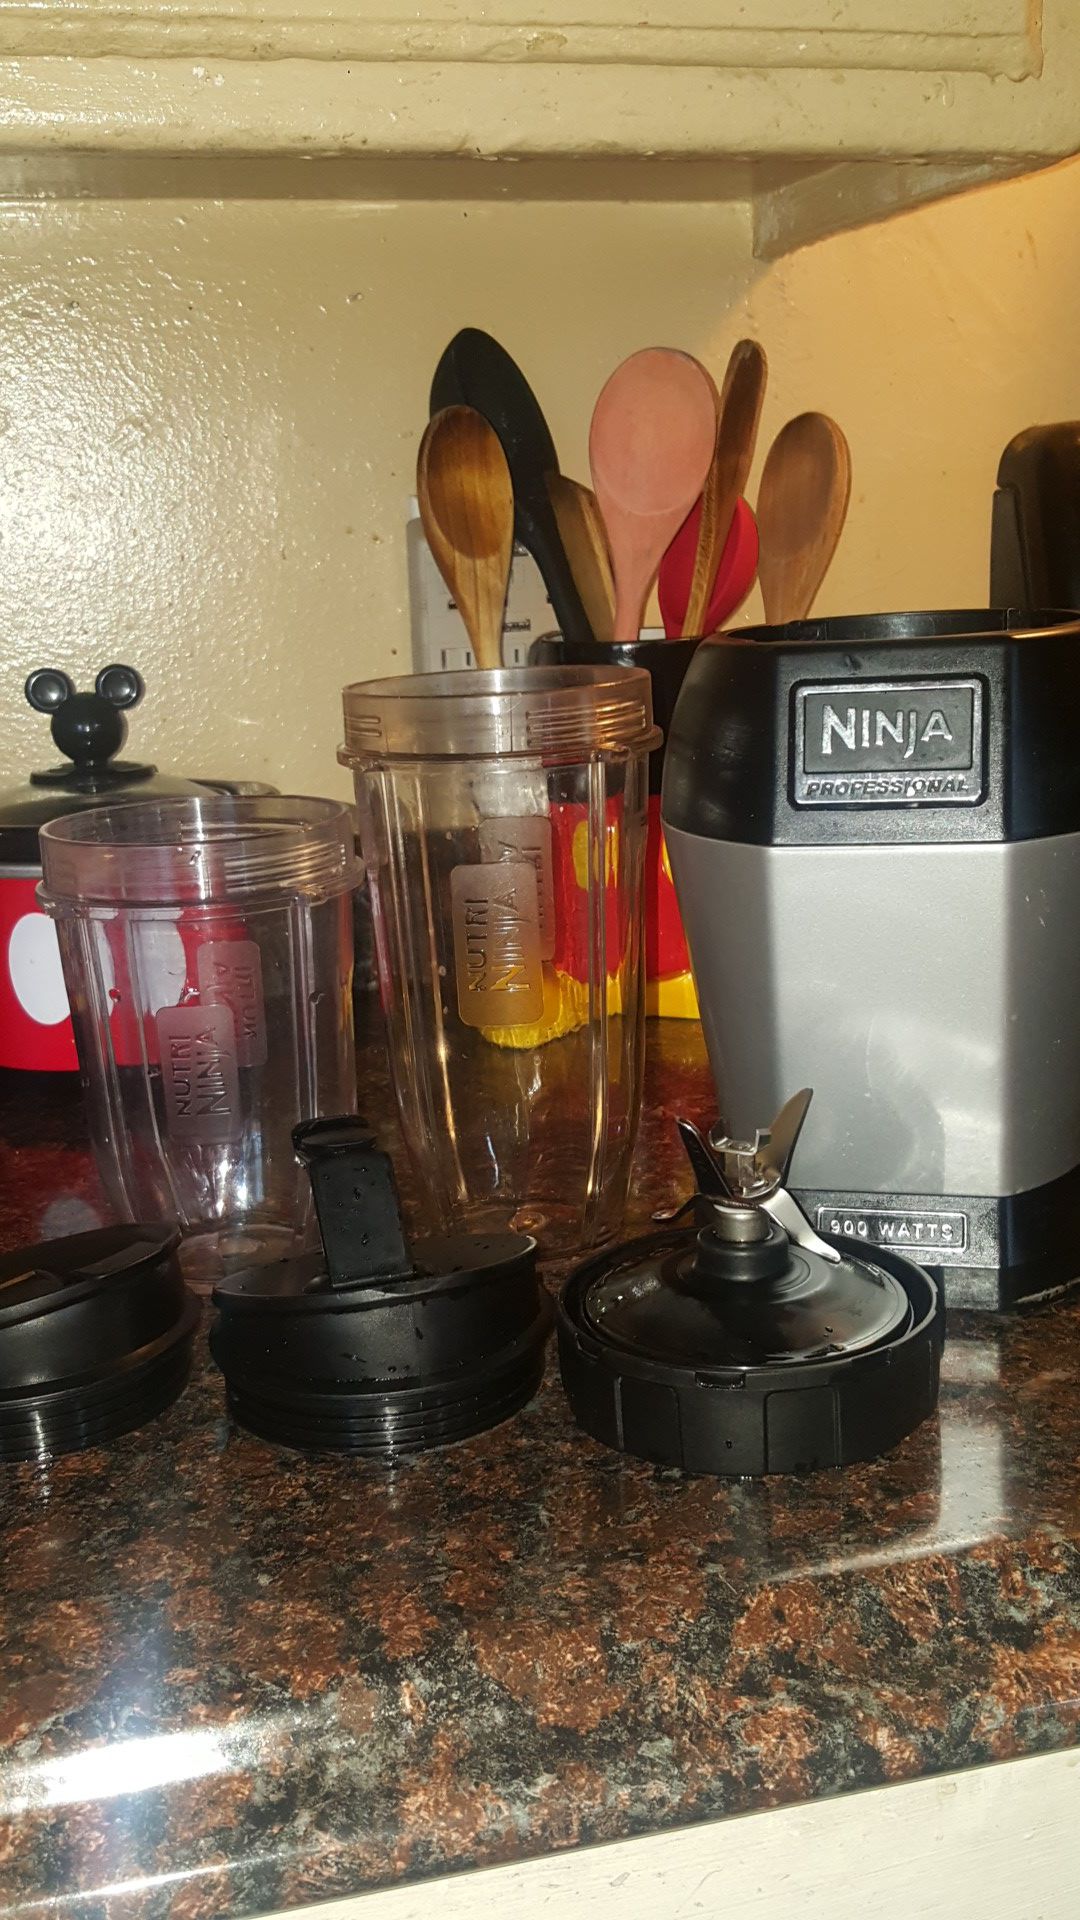 Nutri ninja professional smoothe blender!!!